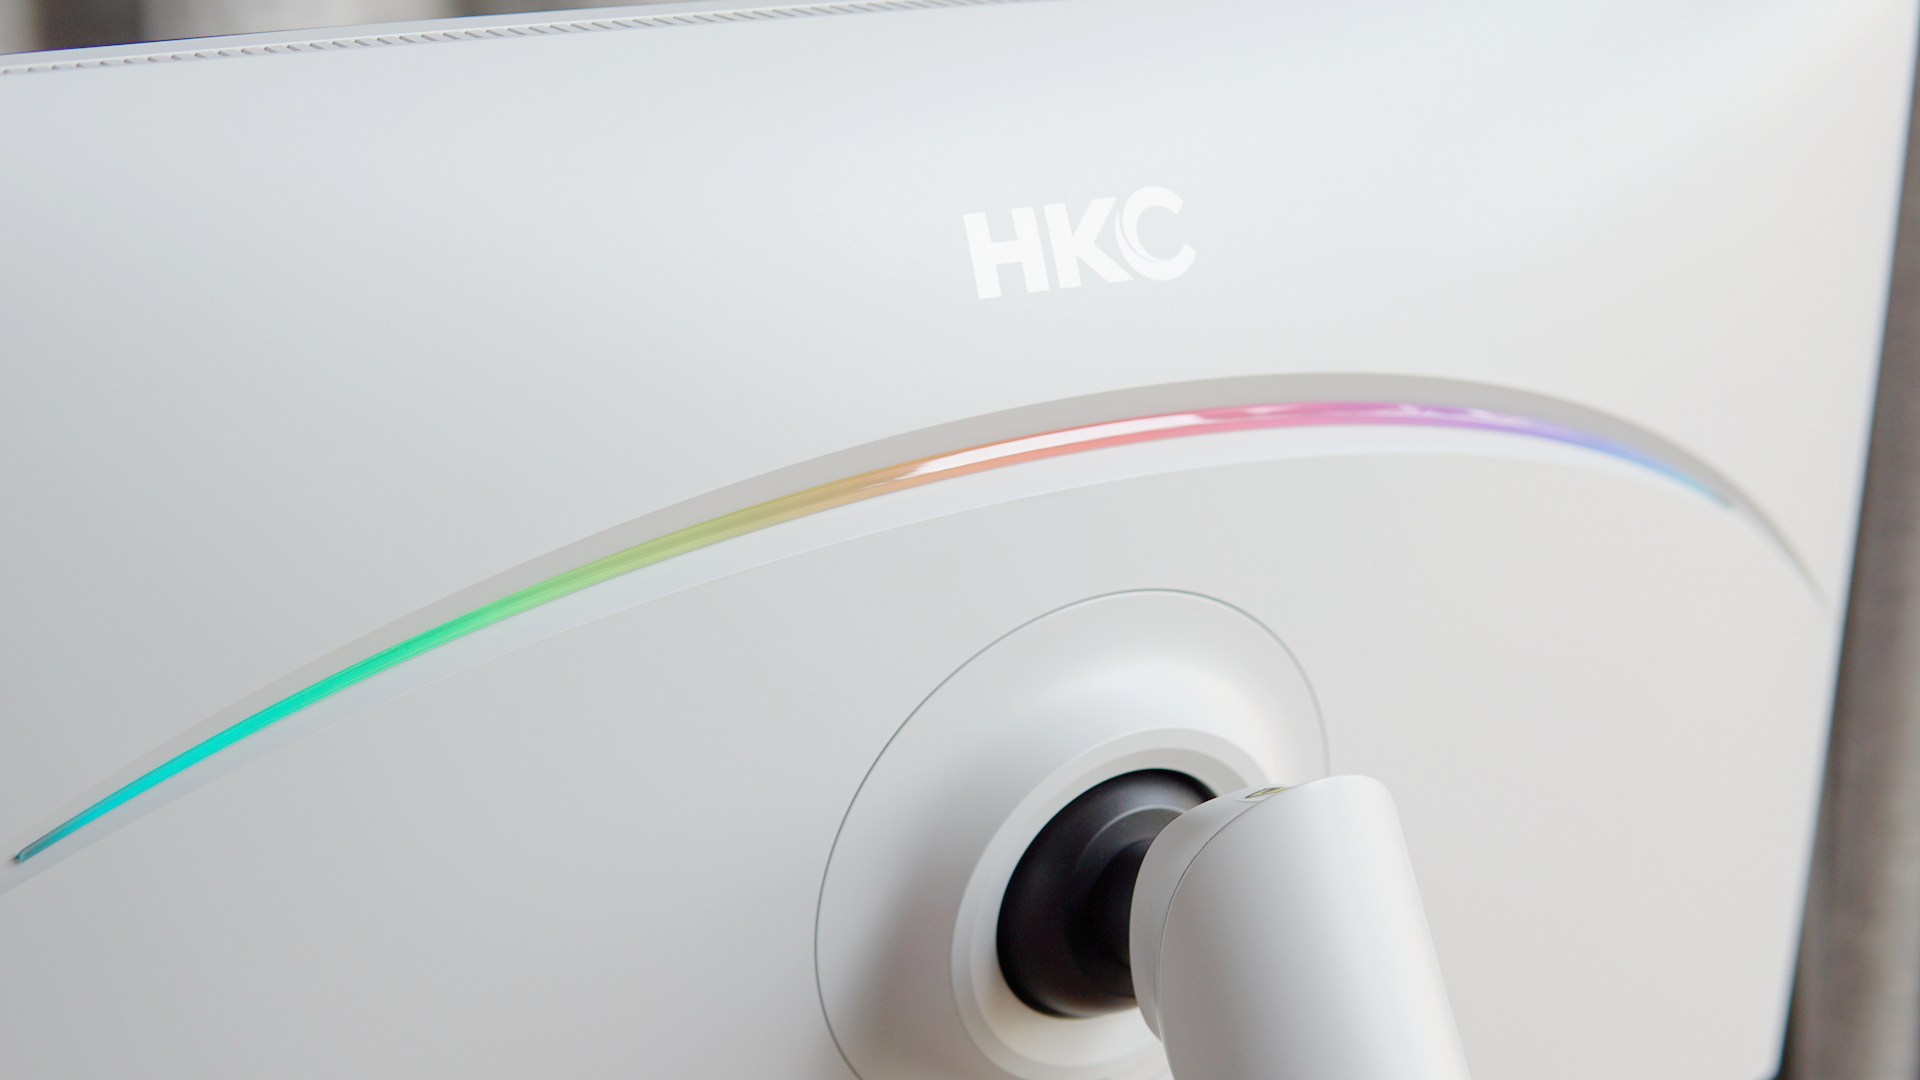 hkc|HKC PG271U显示器测评：4K 144Hz+MiniLED，价格屠夫？